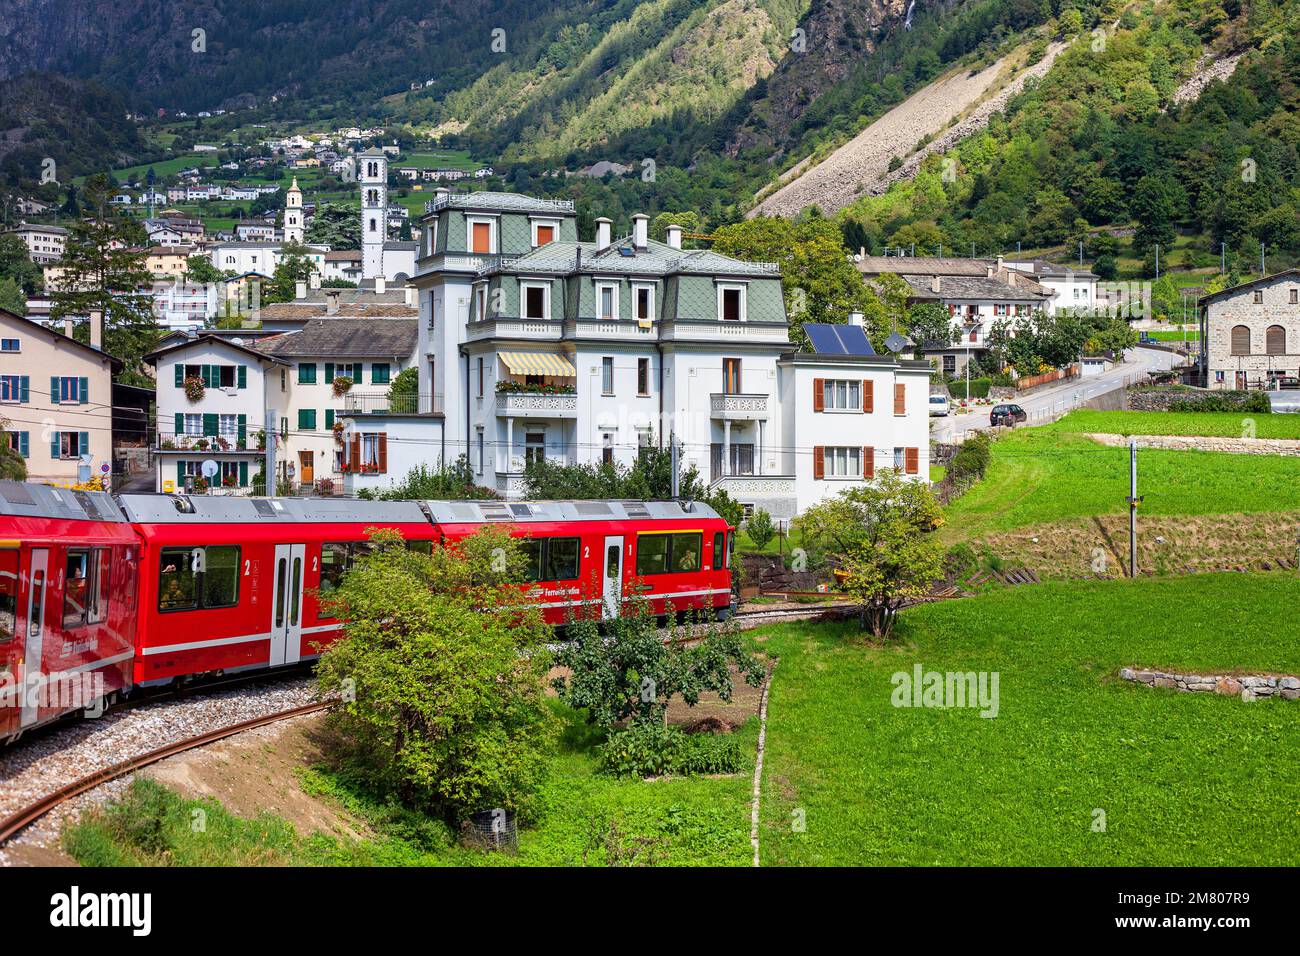 BERNINA Expresszug im Bergdorf Brusio bei Poschiavo, in der Region Bernina, Kanton Grisons, Schweiz. Stockfoto